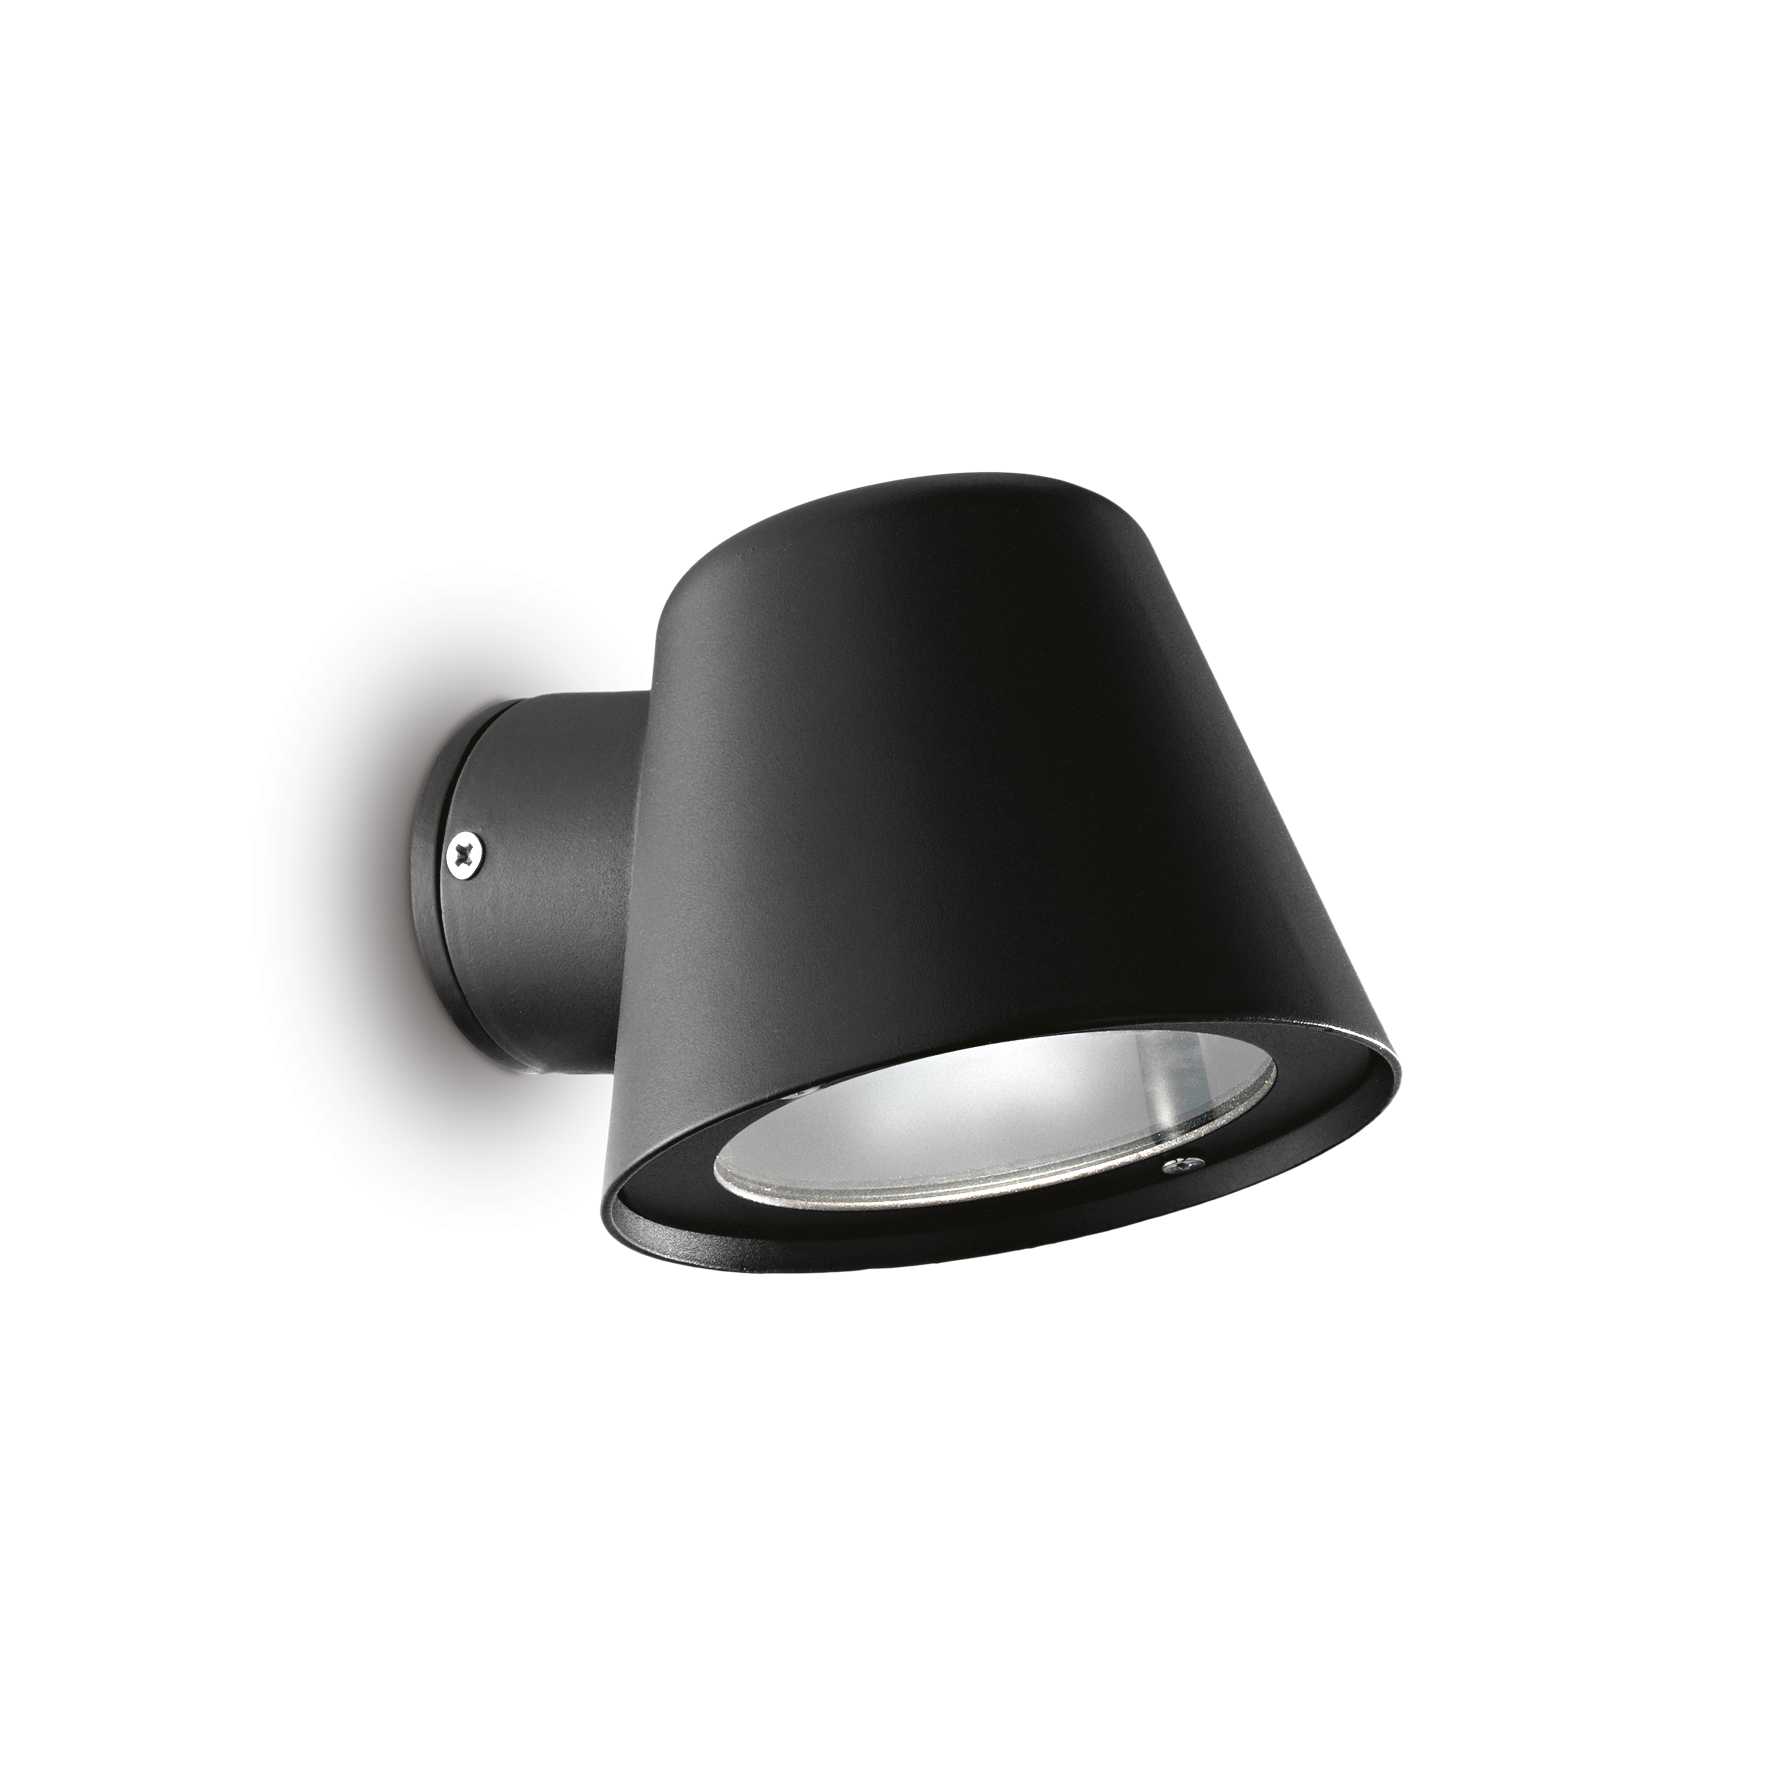 AD hotelska oprema Vanjska zidna lampa Gas ap1- Crne boje slika proizvoda